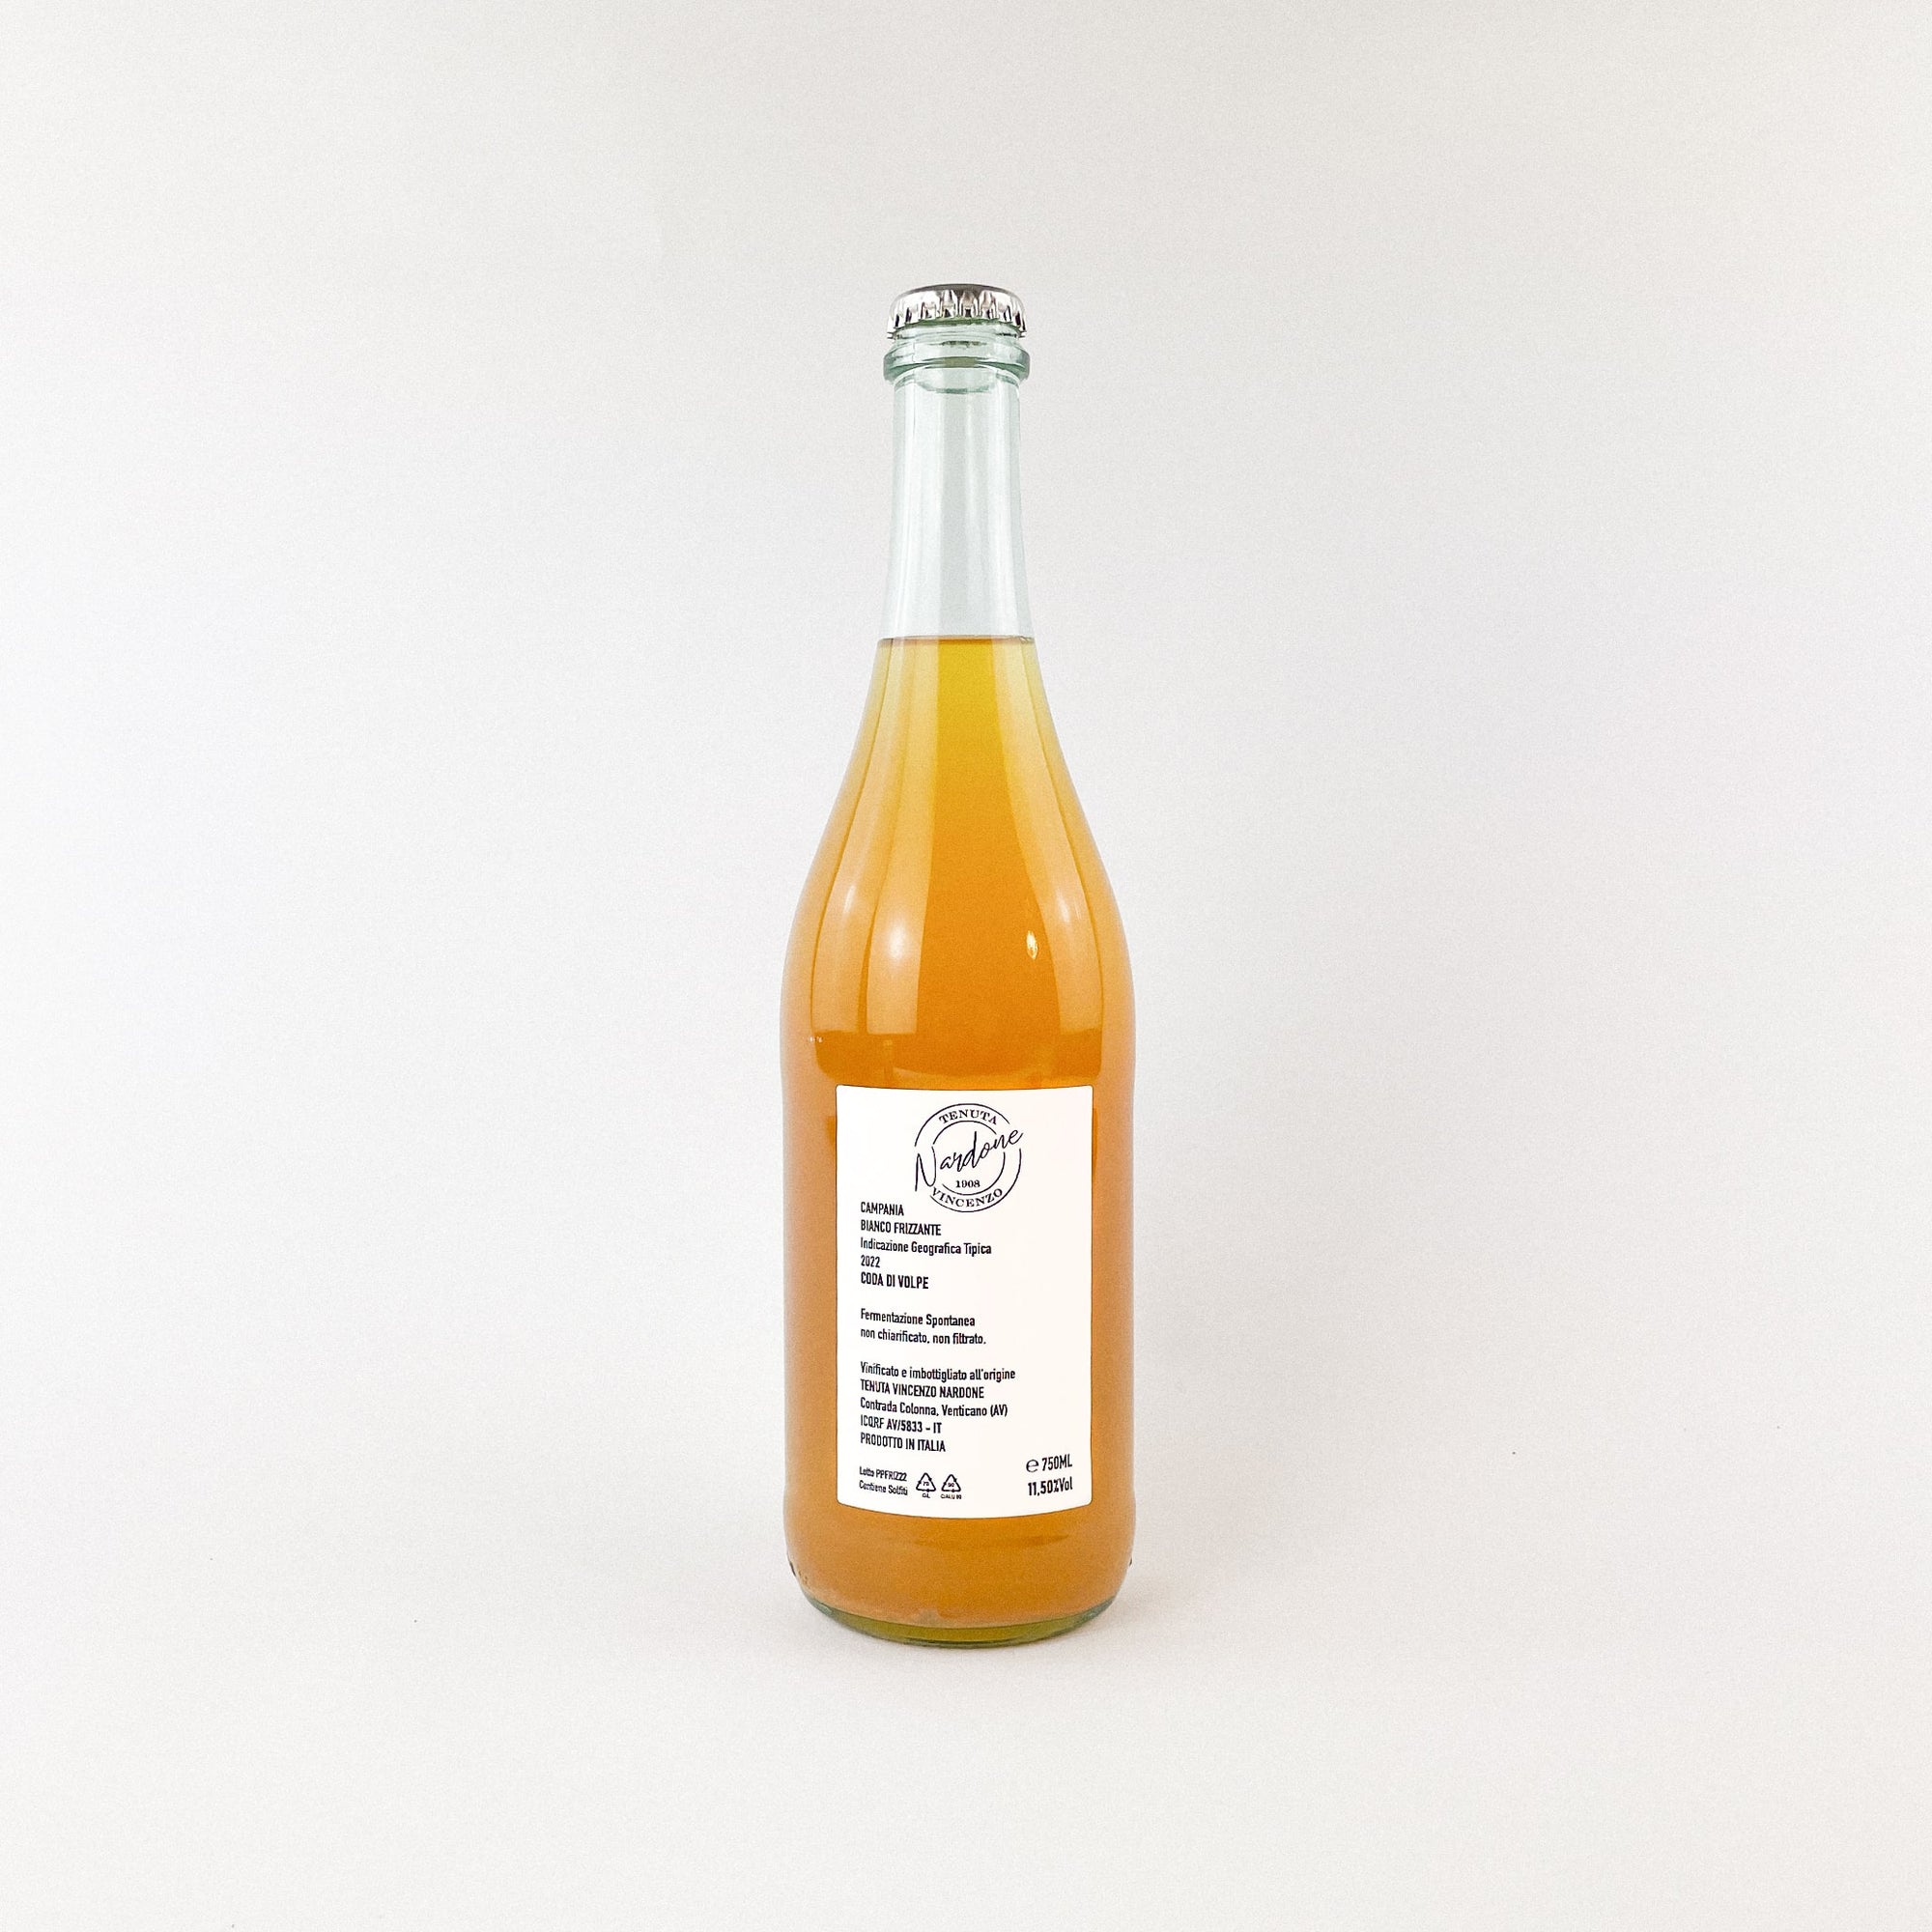 A bottle of natural sparkling wine orange pet nat by Tenuta Nardone front view